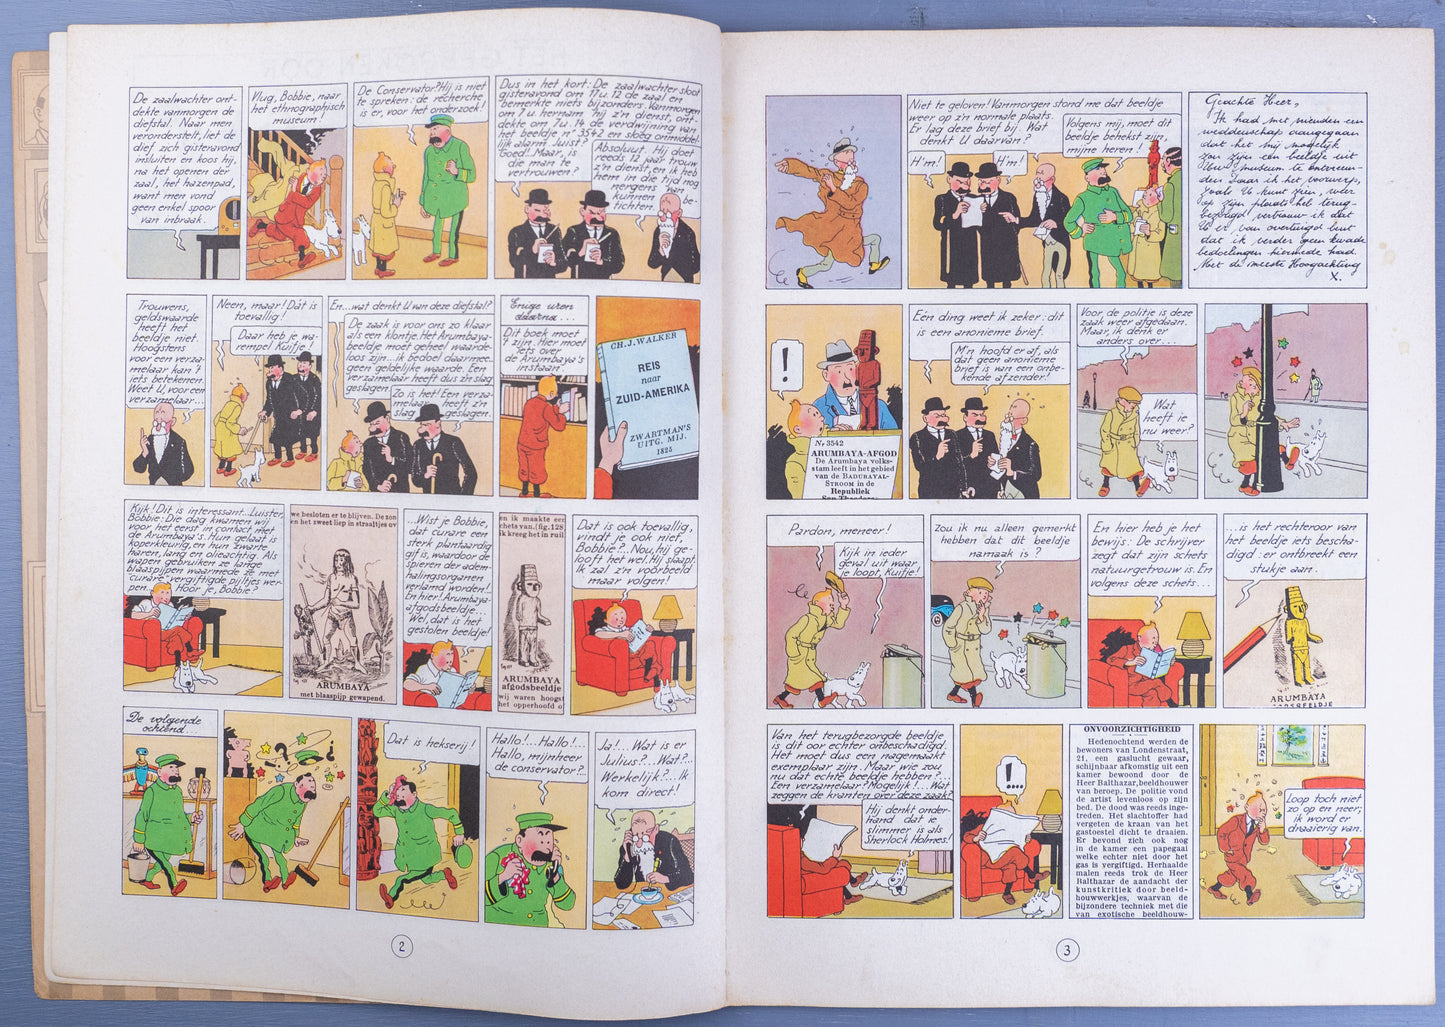 Kuifje: Het Gebroken Oor 1963 Early Dutch Paperback Edition Casterman Tintin by Herge